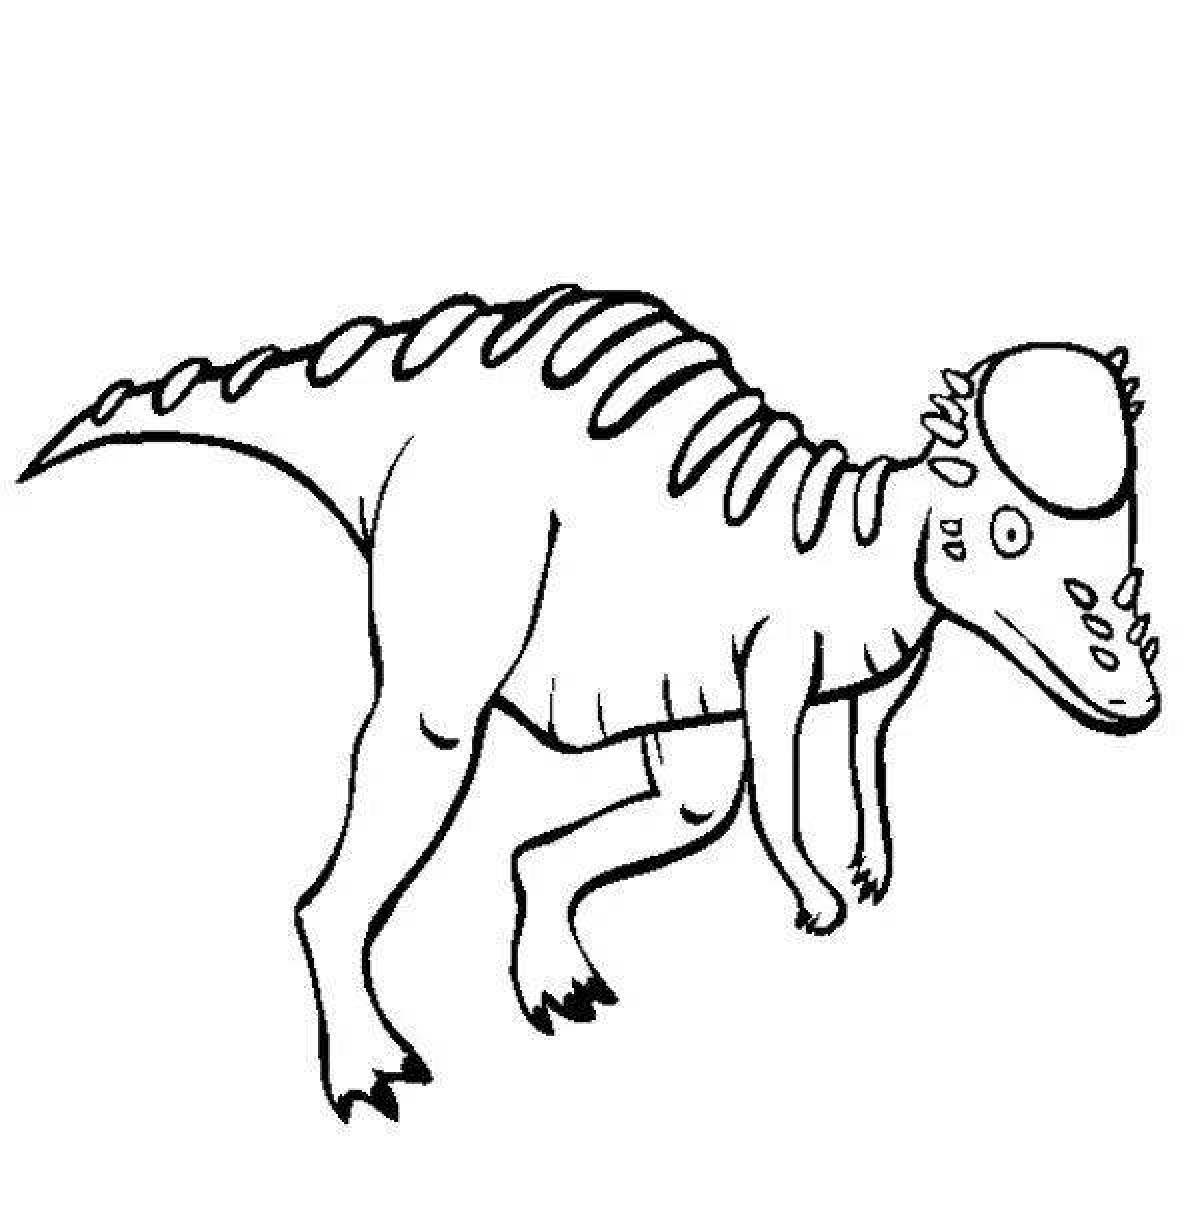 Amazing Pachycephalosaurus coloring book